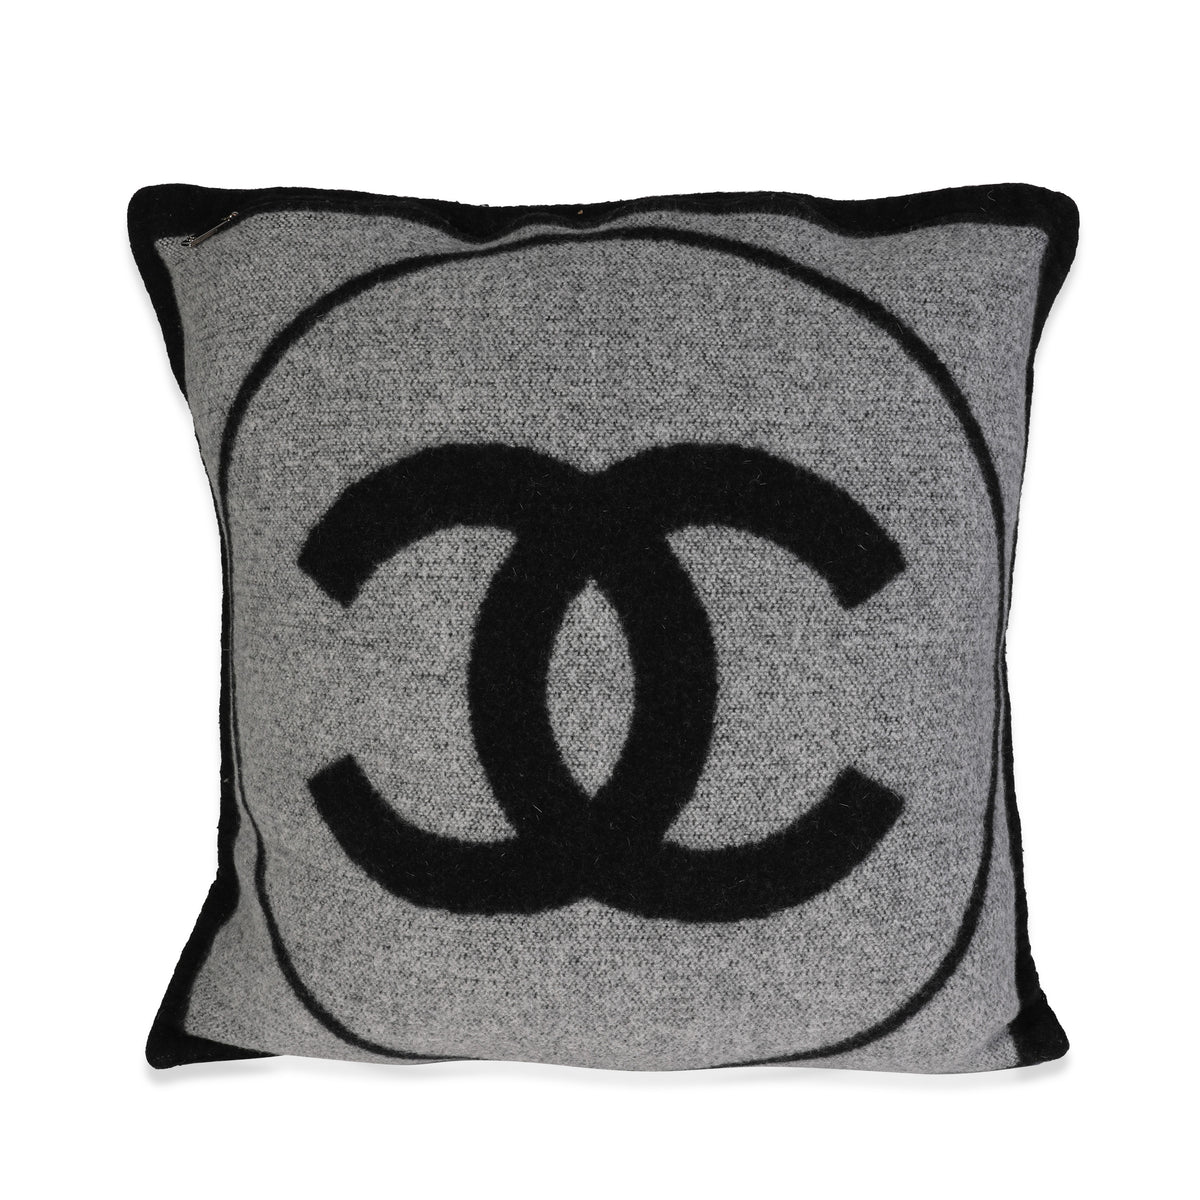 chanel cushion covers